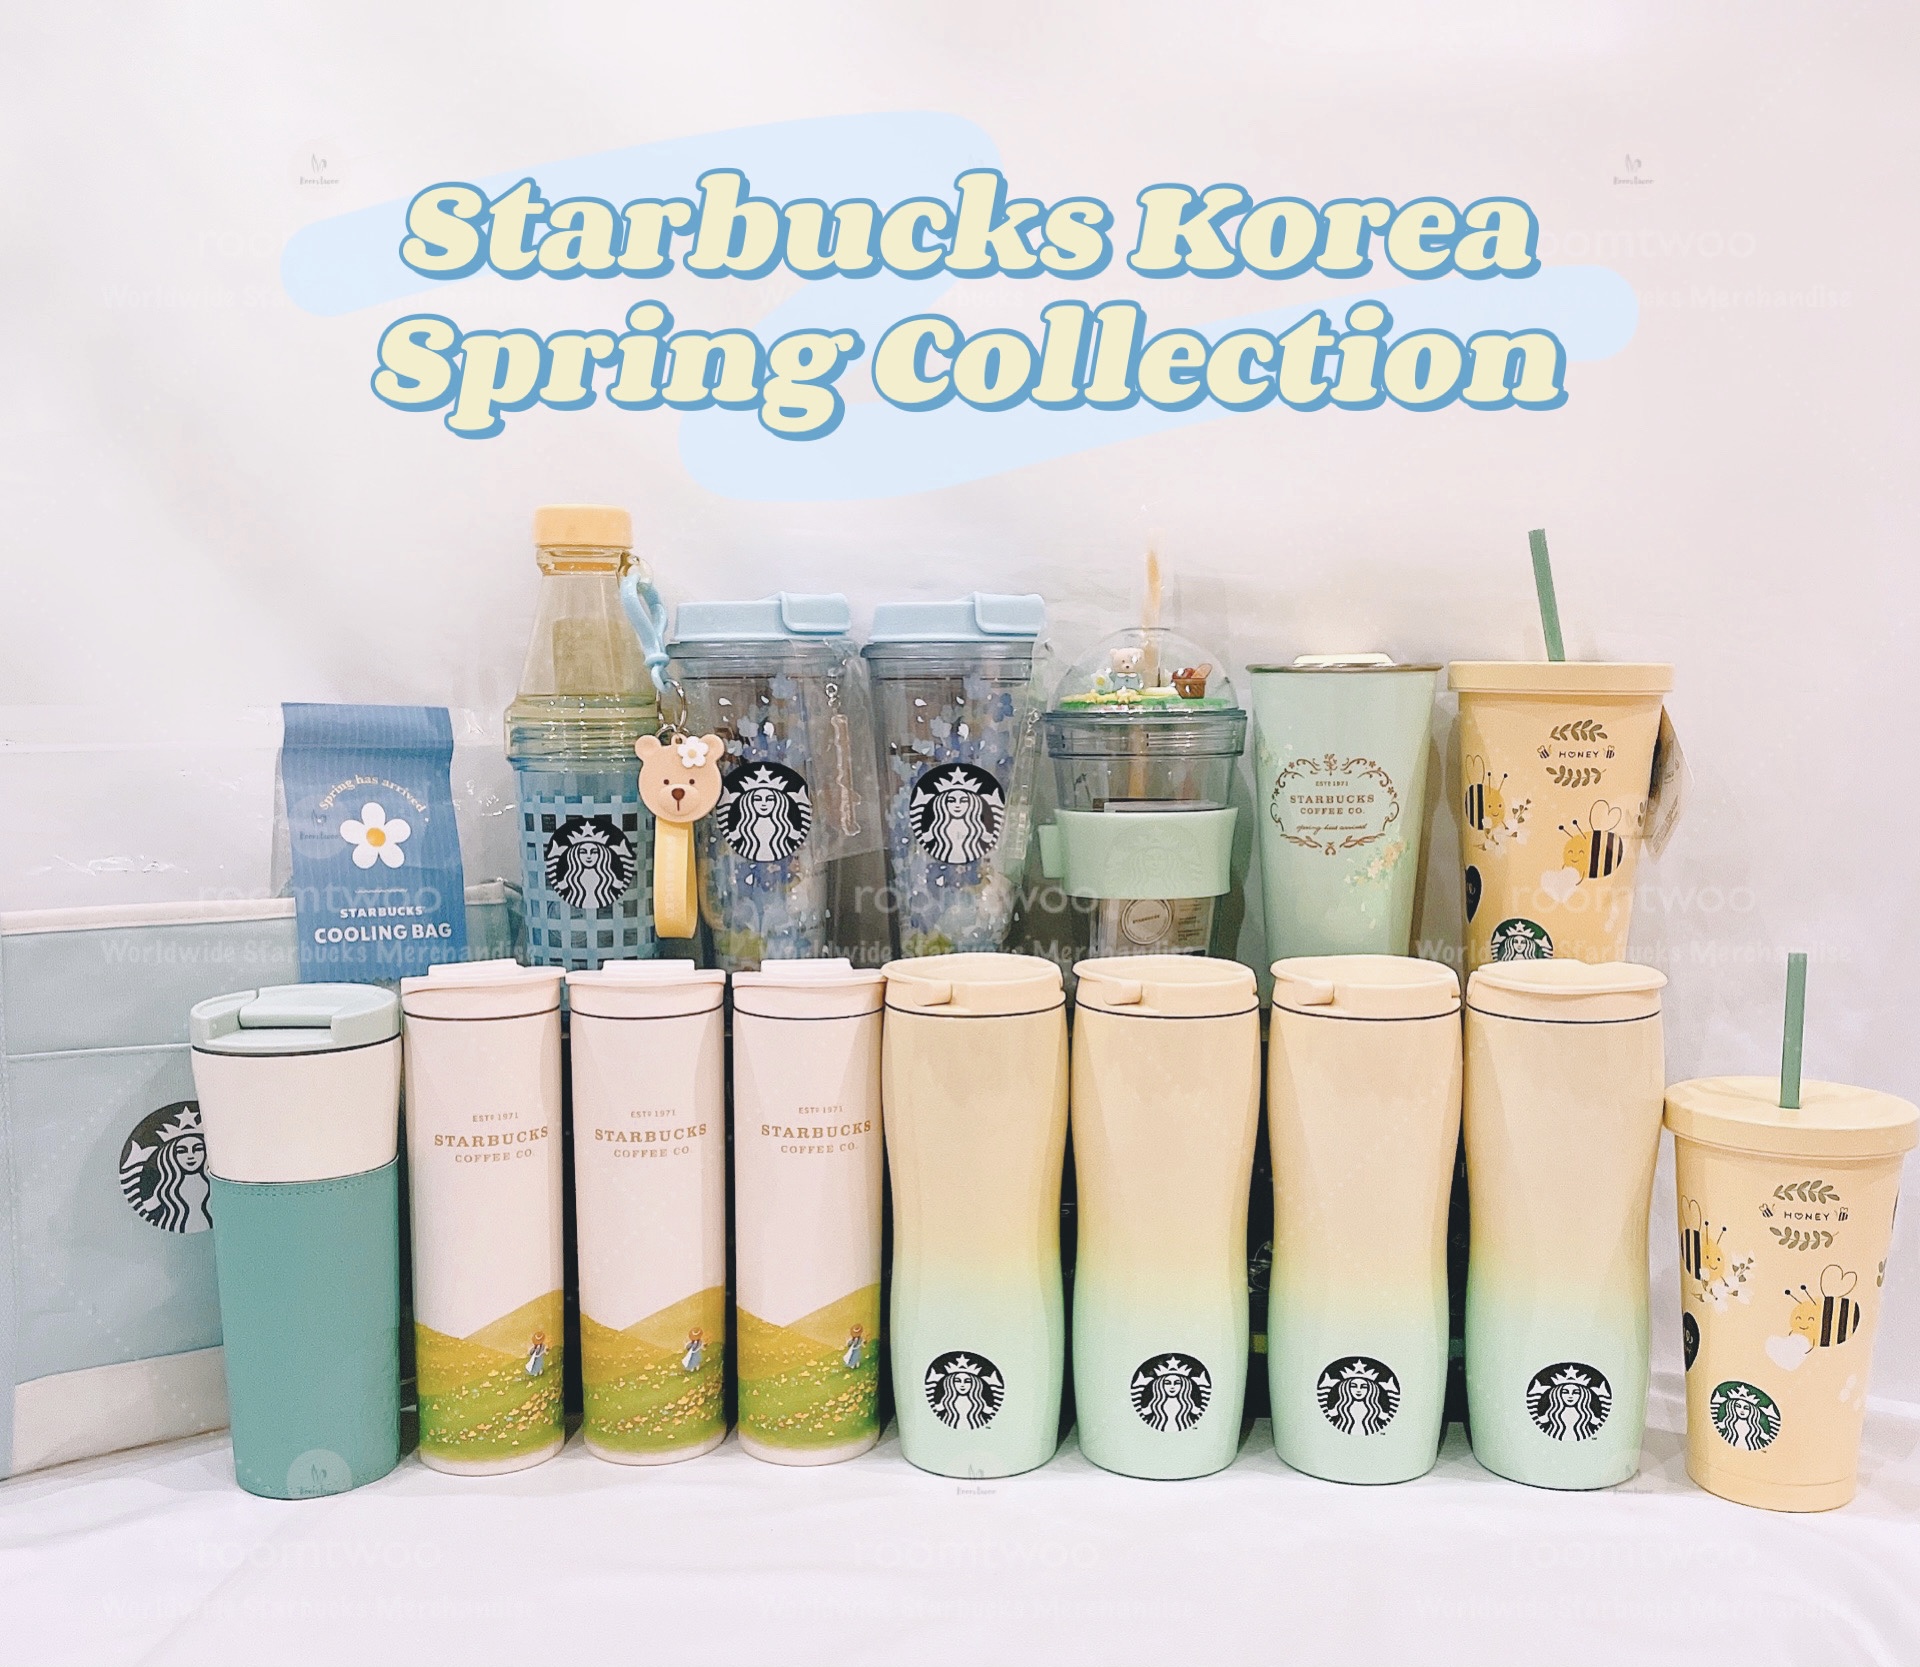 Starbucks Korea 2021 Spring Collection